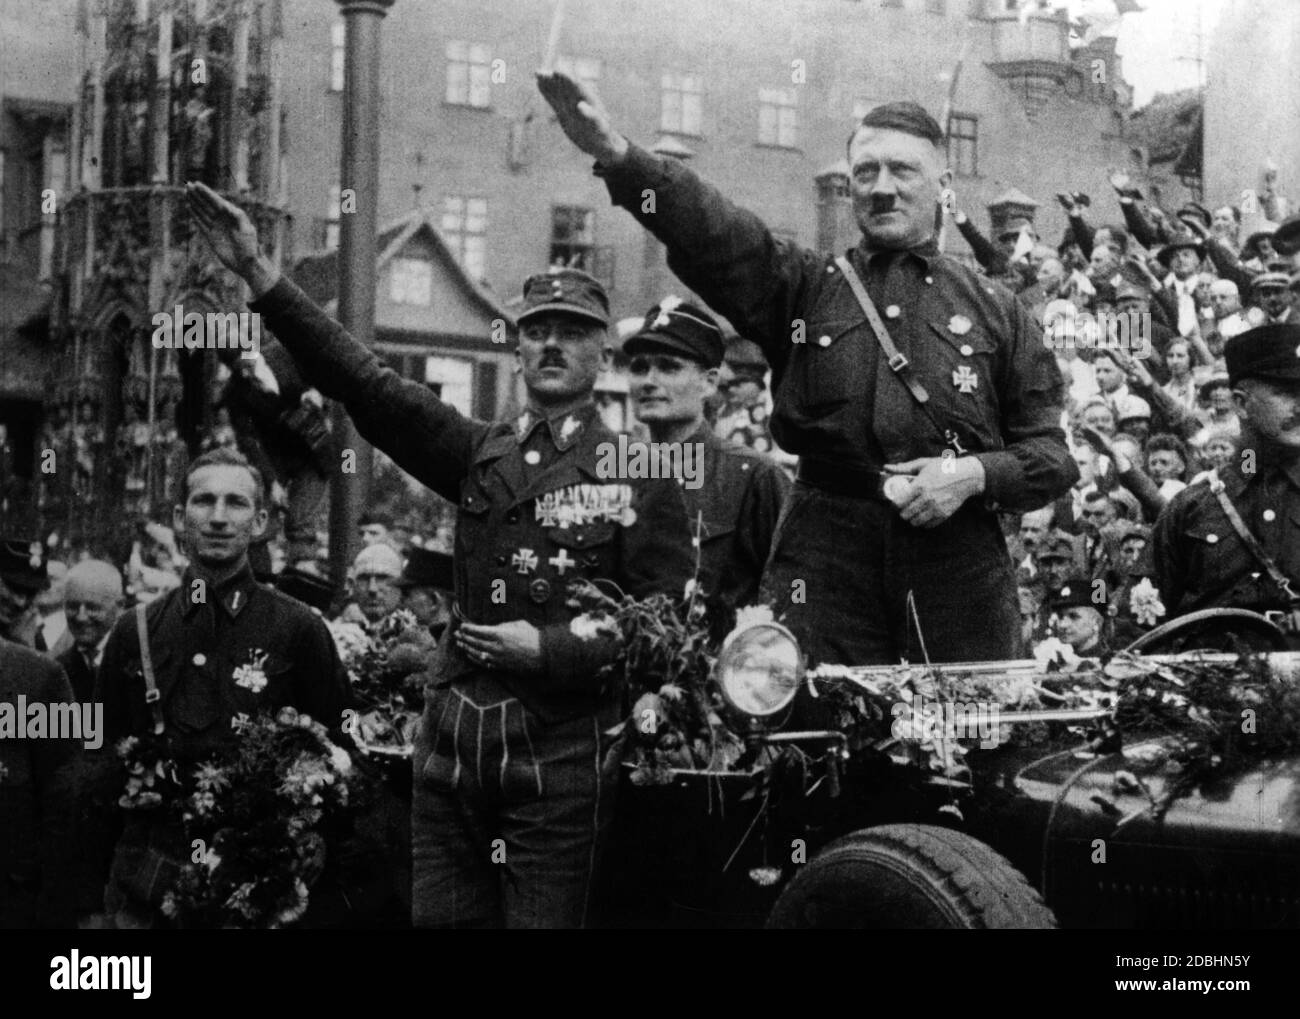 Left to right: Pfeffer von Salomon (soon von Pfeffer), Rudolf Hess, Adolf Hitler and Uli Graf during the Nazi Party Congress in Nuremberg on the Main Market Square. In the